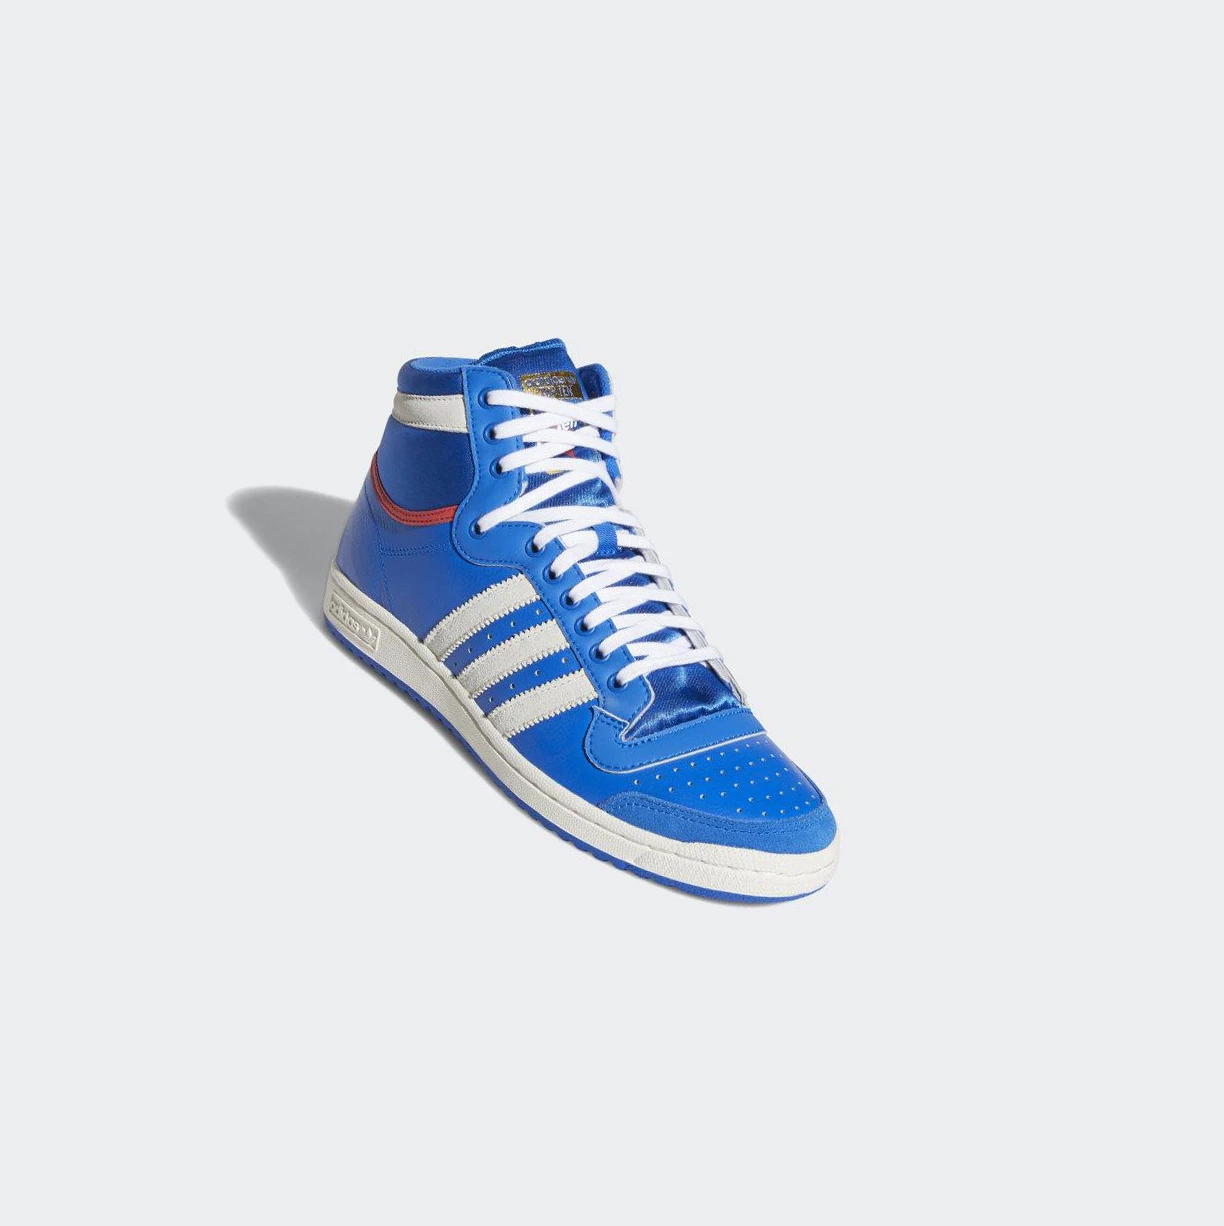 Originálne Topánky Adidas Top Ten Hi Damske Modre | 952SKPQMKVW